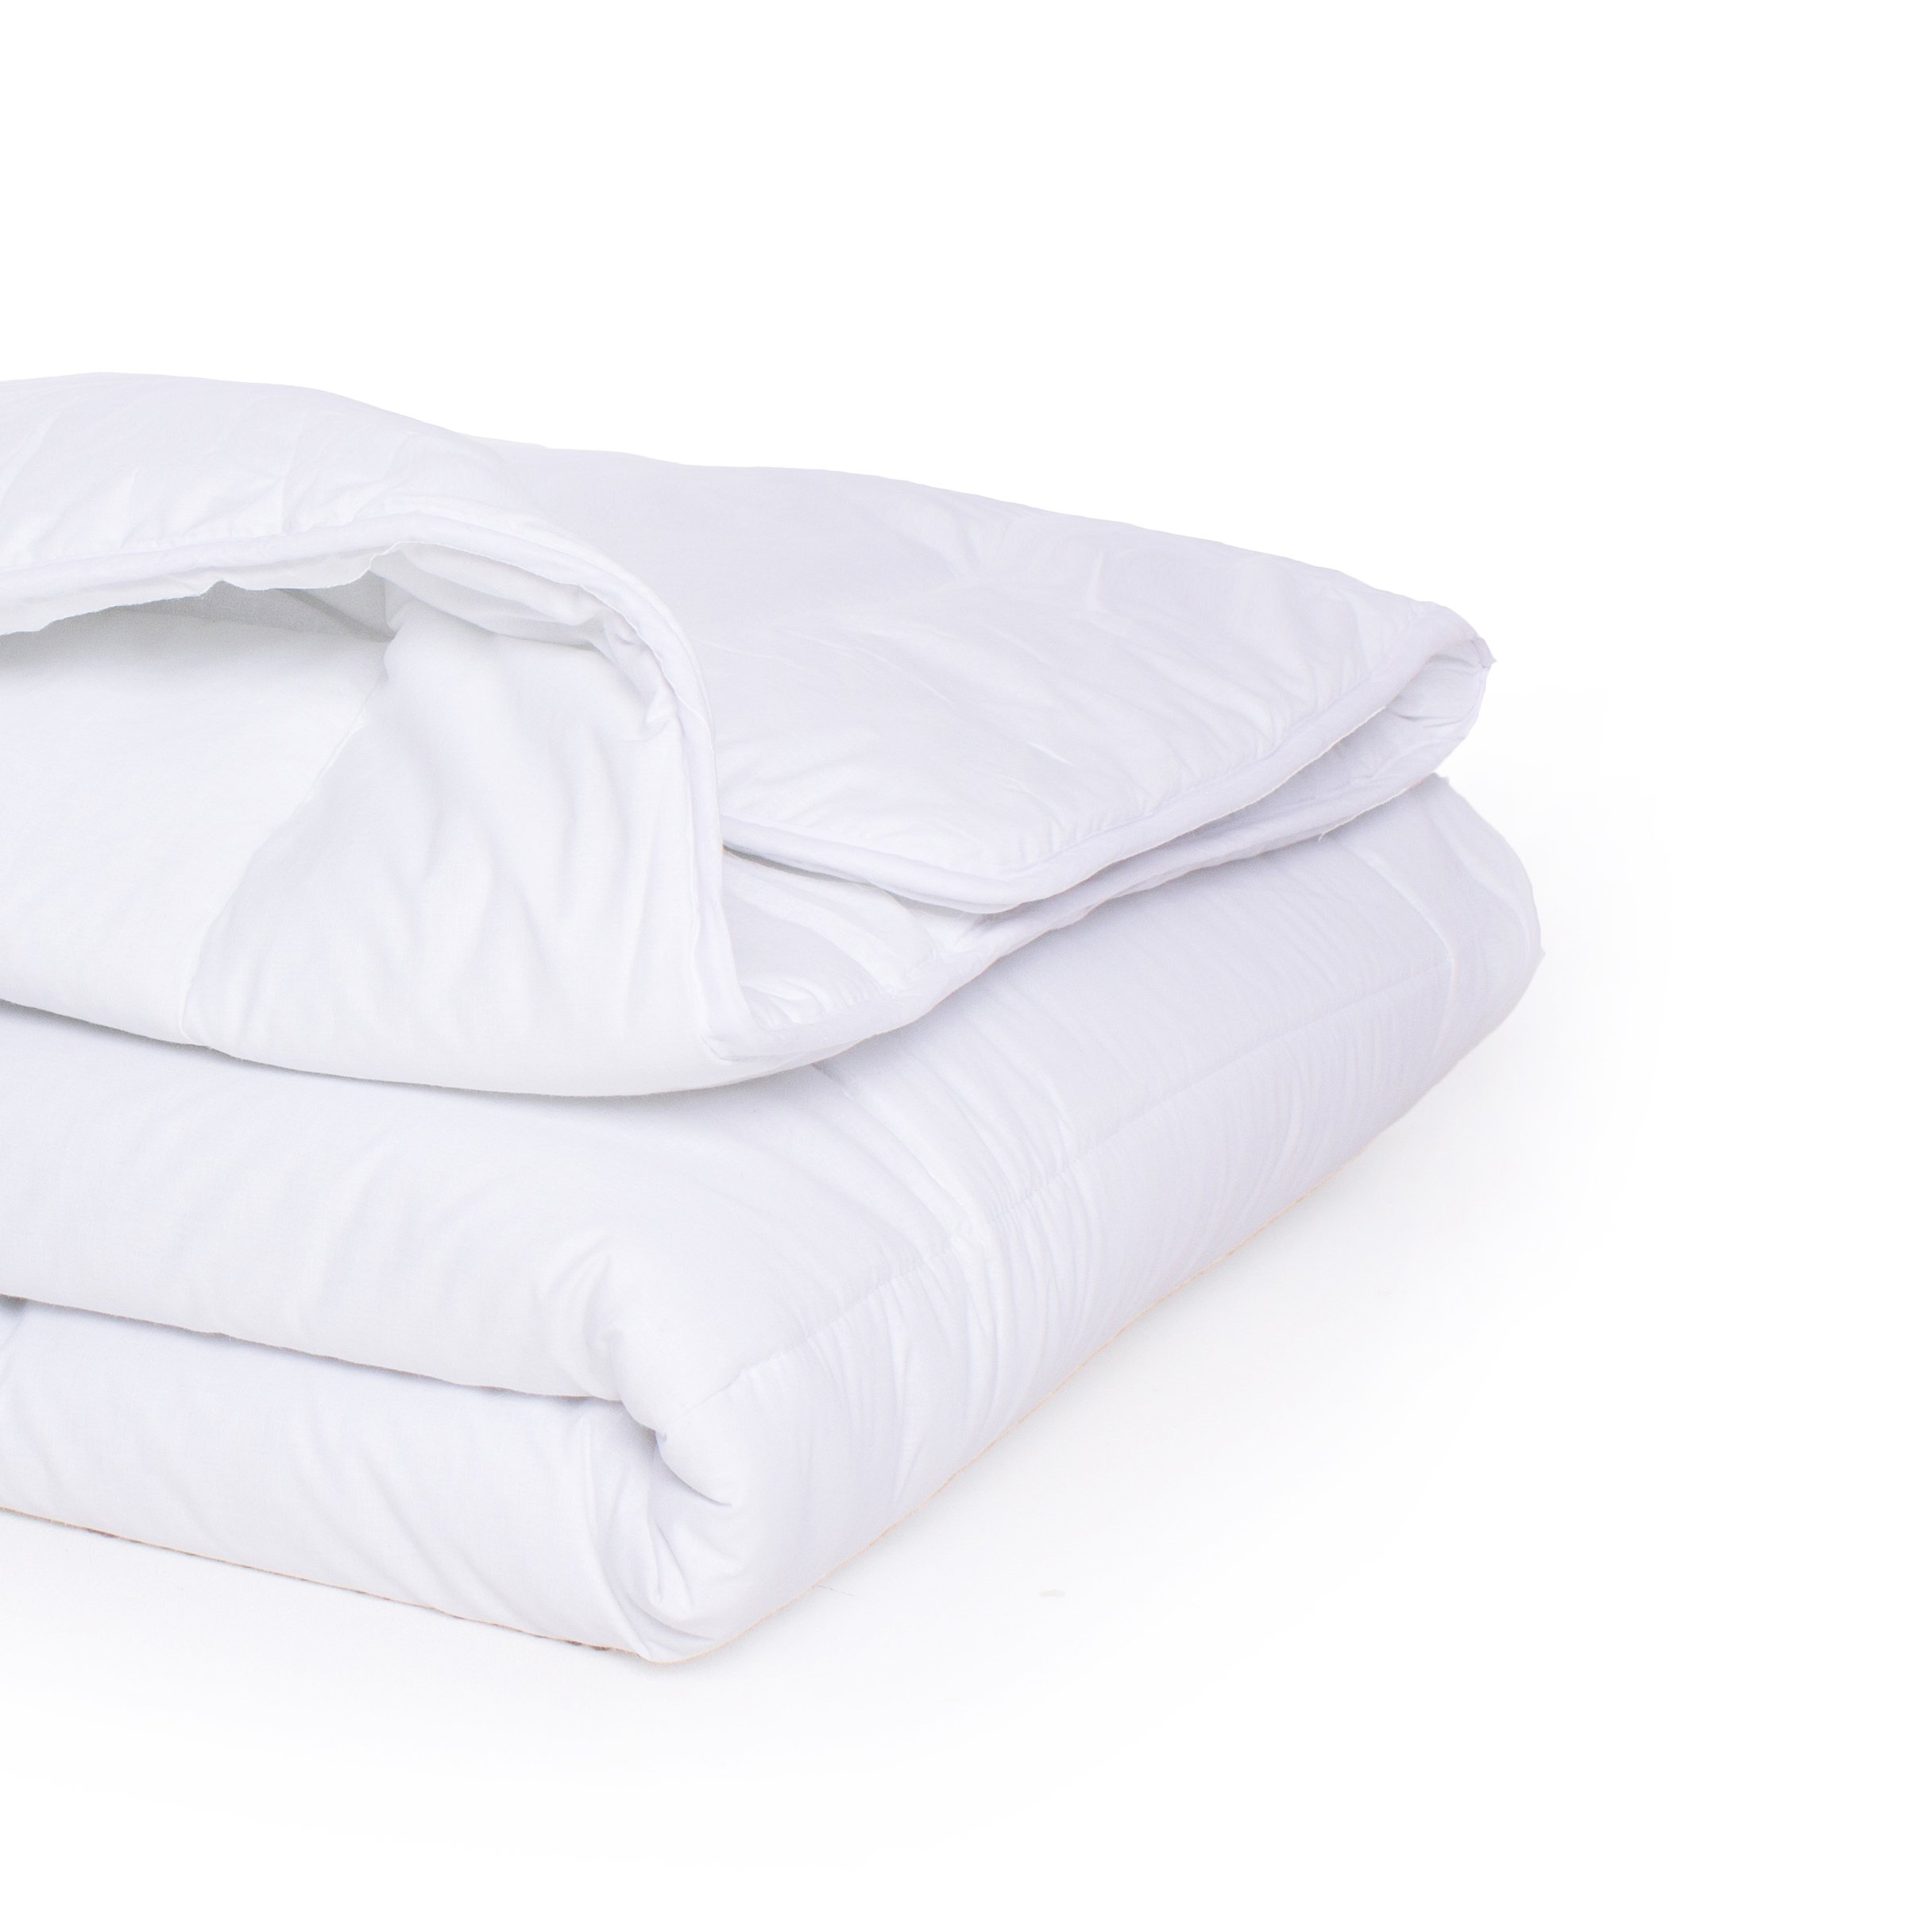 Одеяло шерстяное MirSon Bianco Экстра Премиум №0786, демисезонное, 200x220 см, белое - фото 4